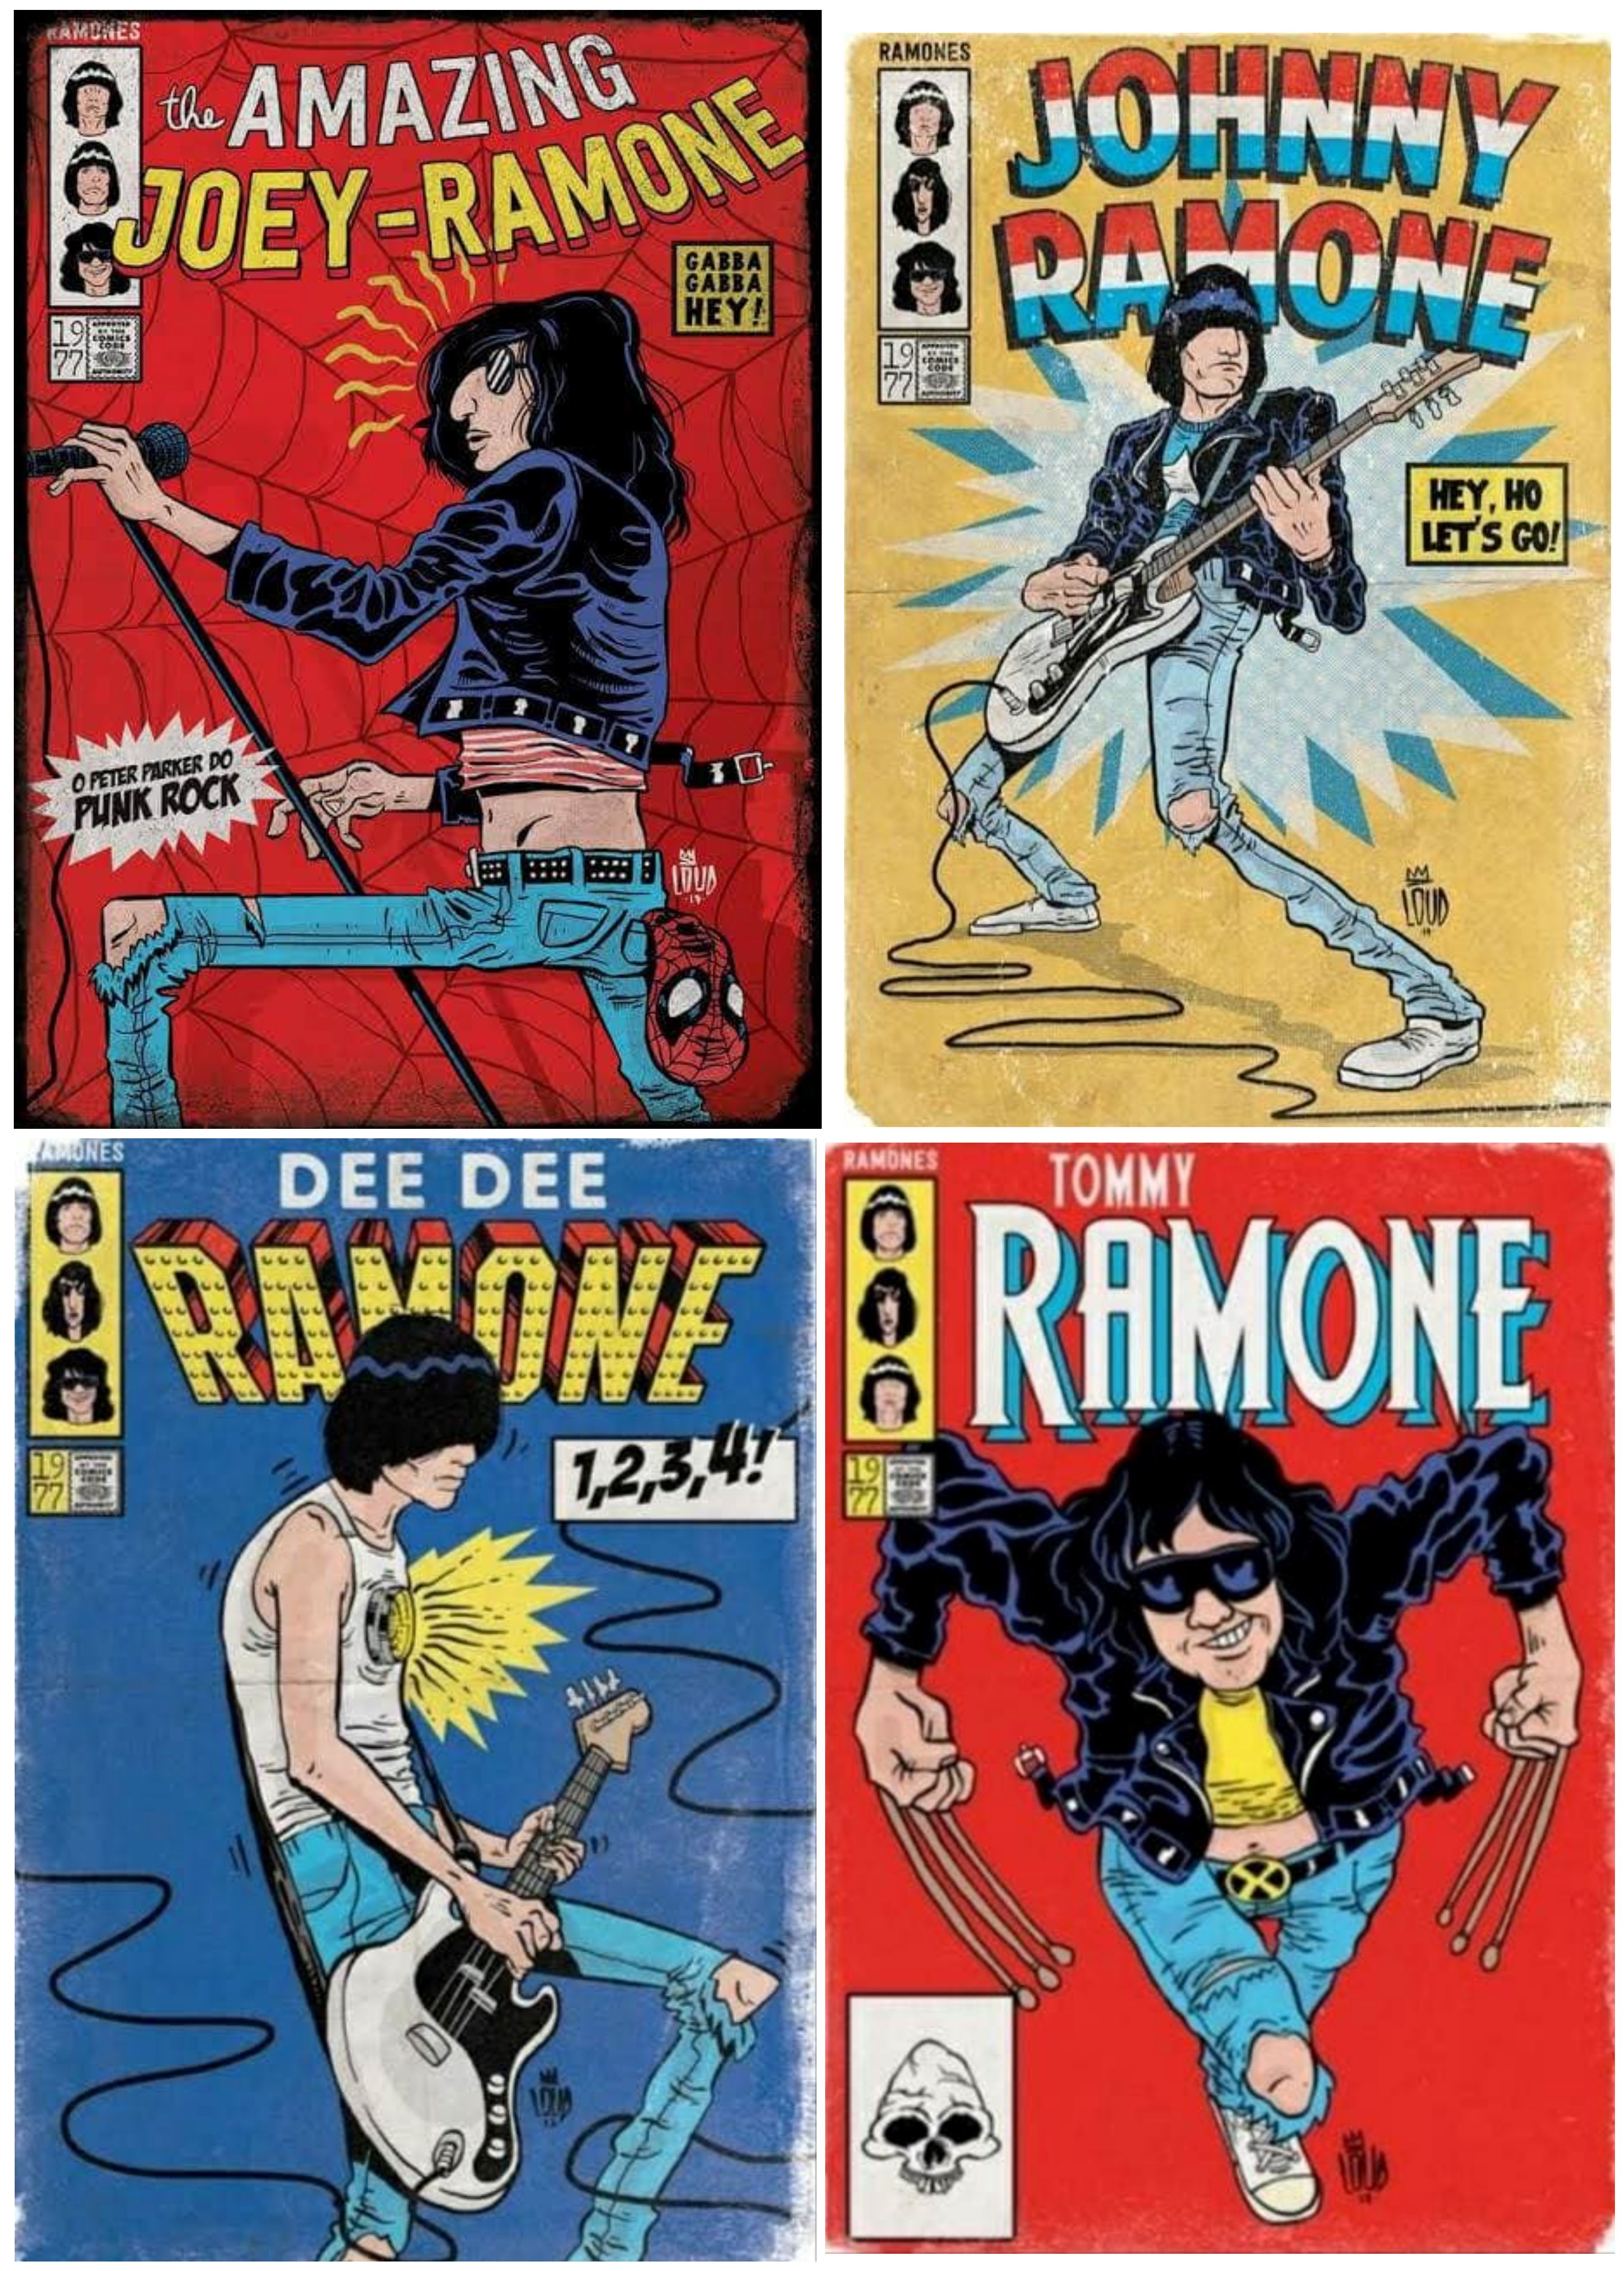 Forestdweller: The Ramones